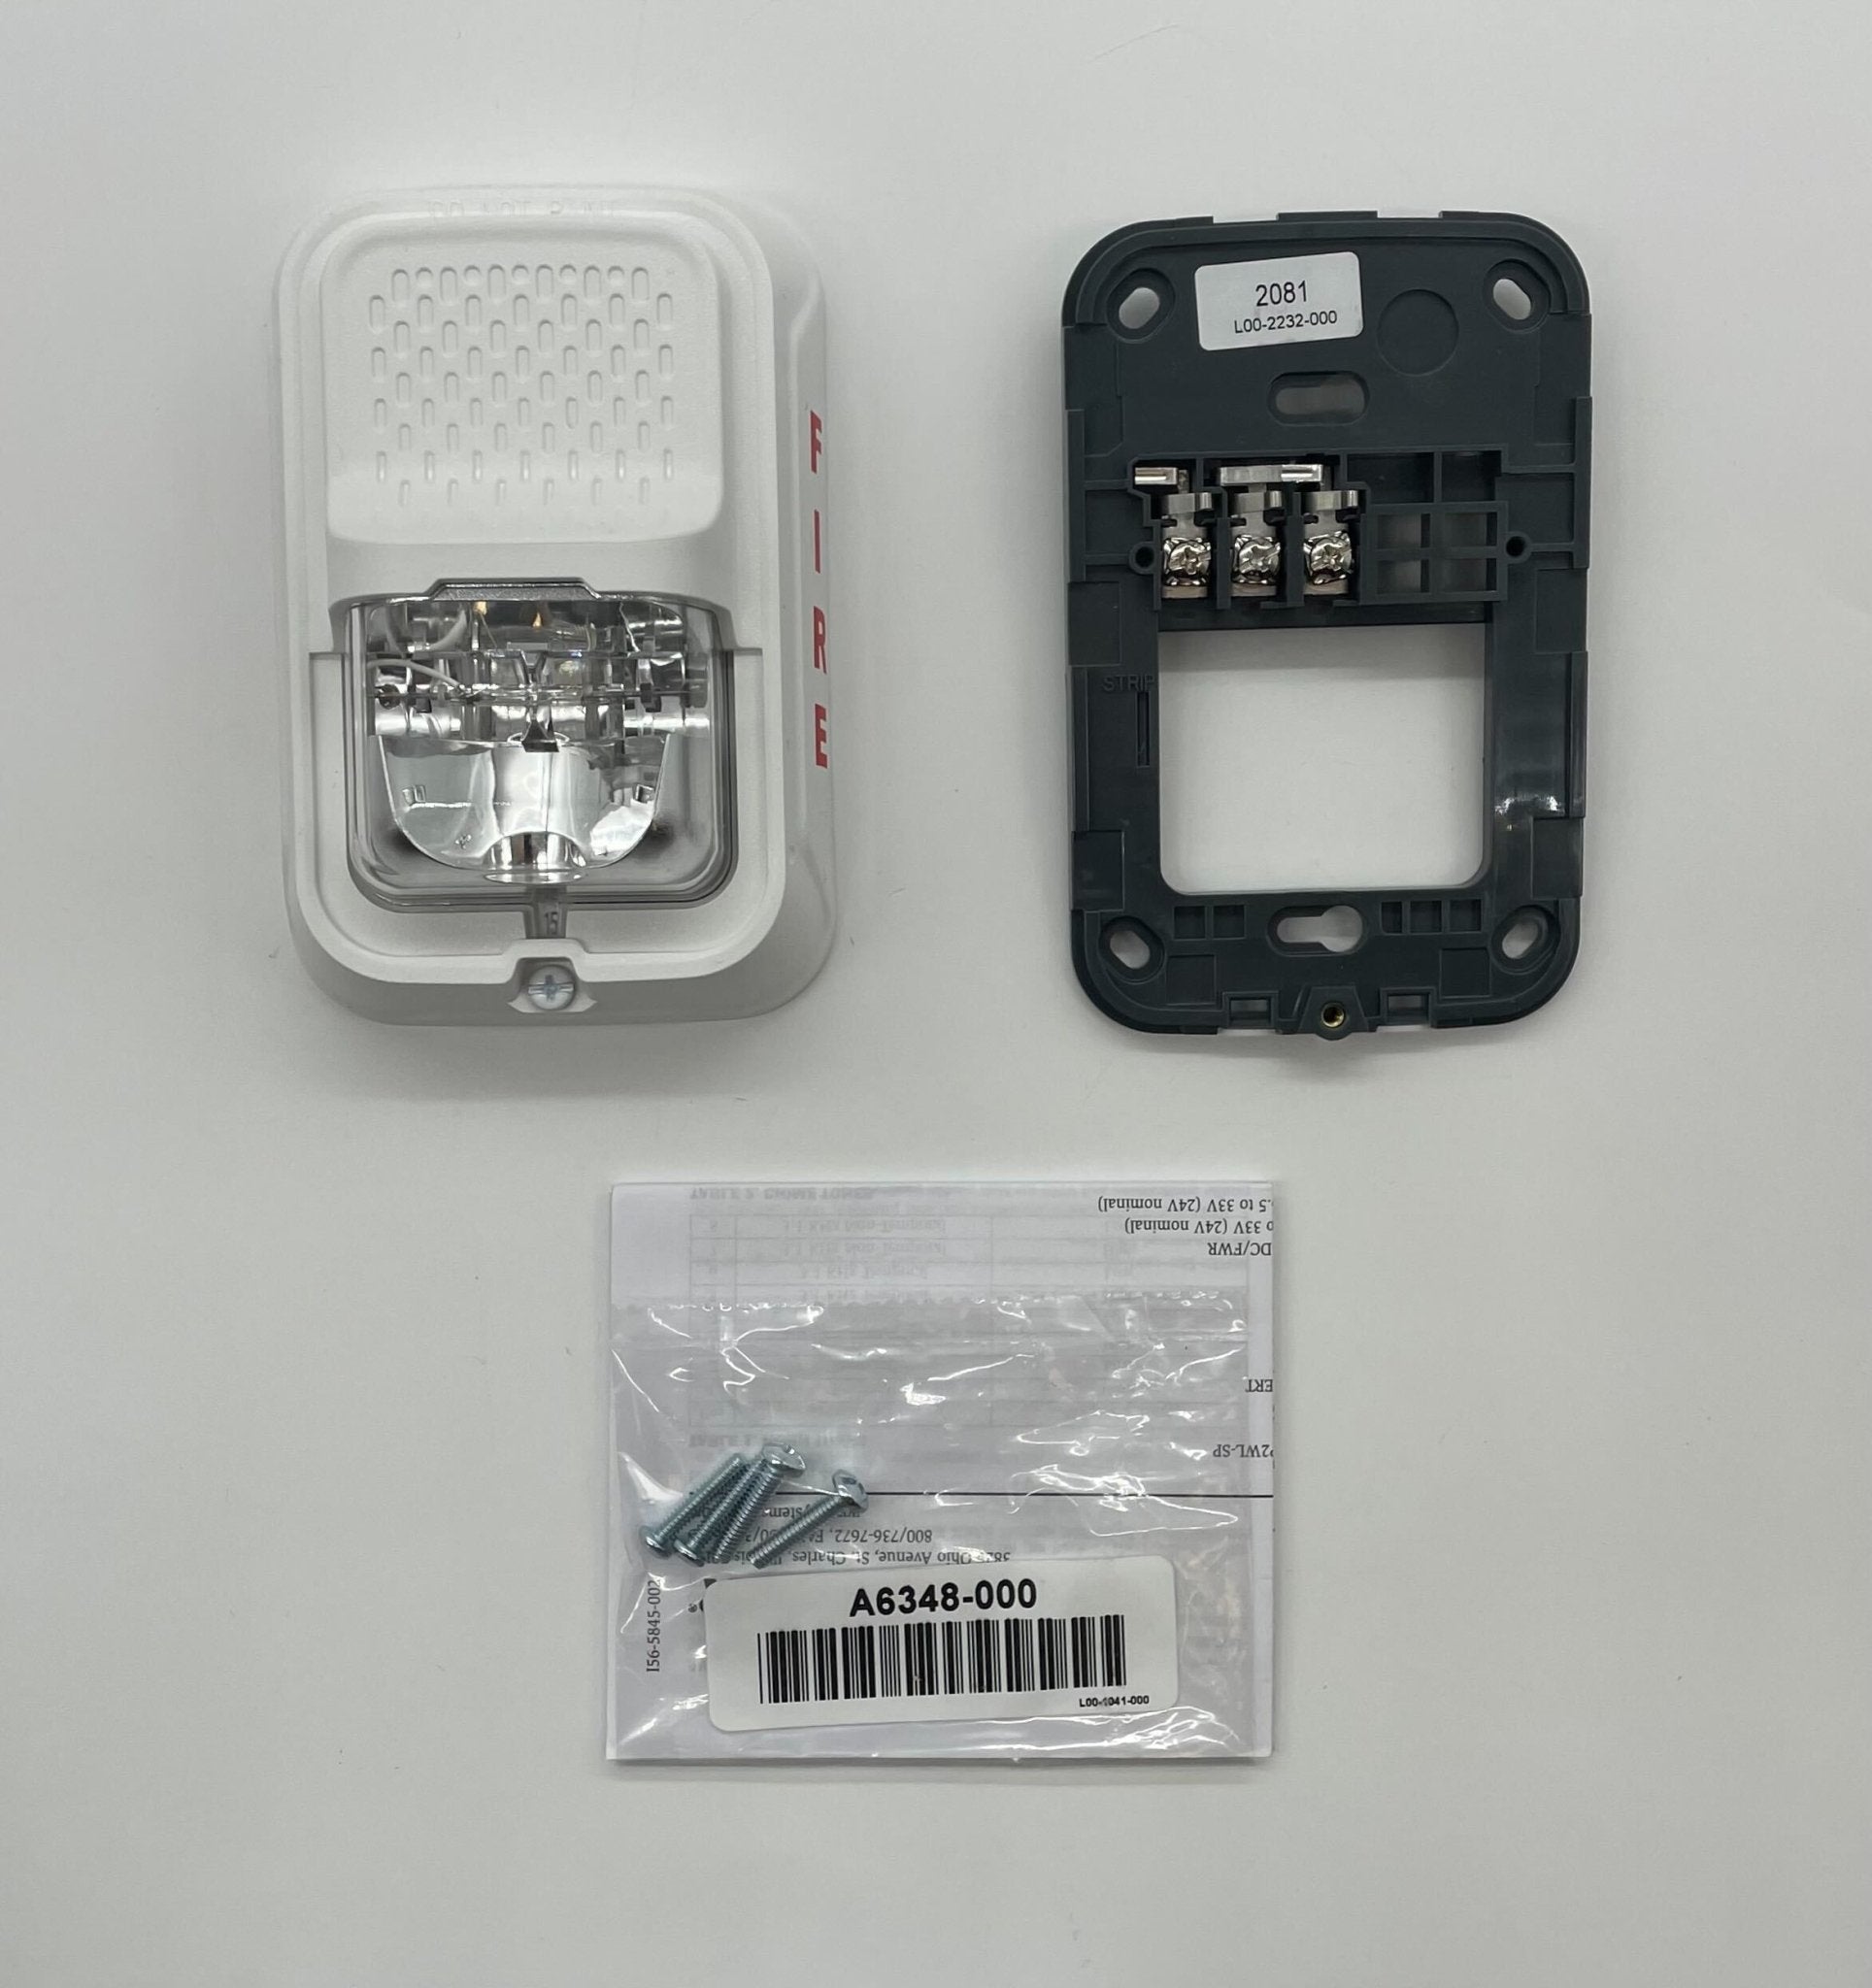 System Sensor SGWL - The Fire Alarm Supplier